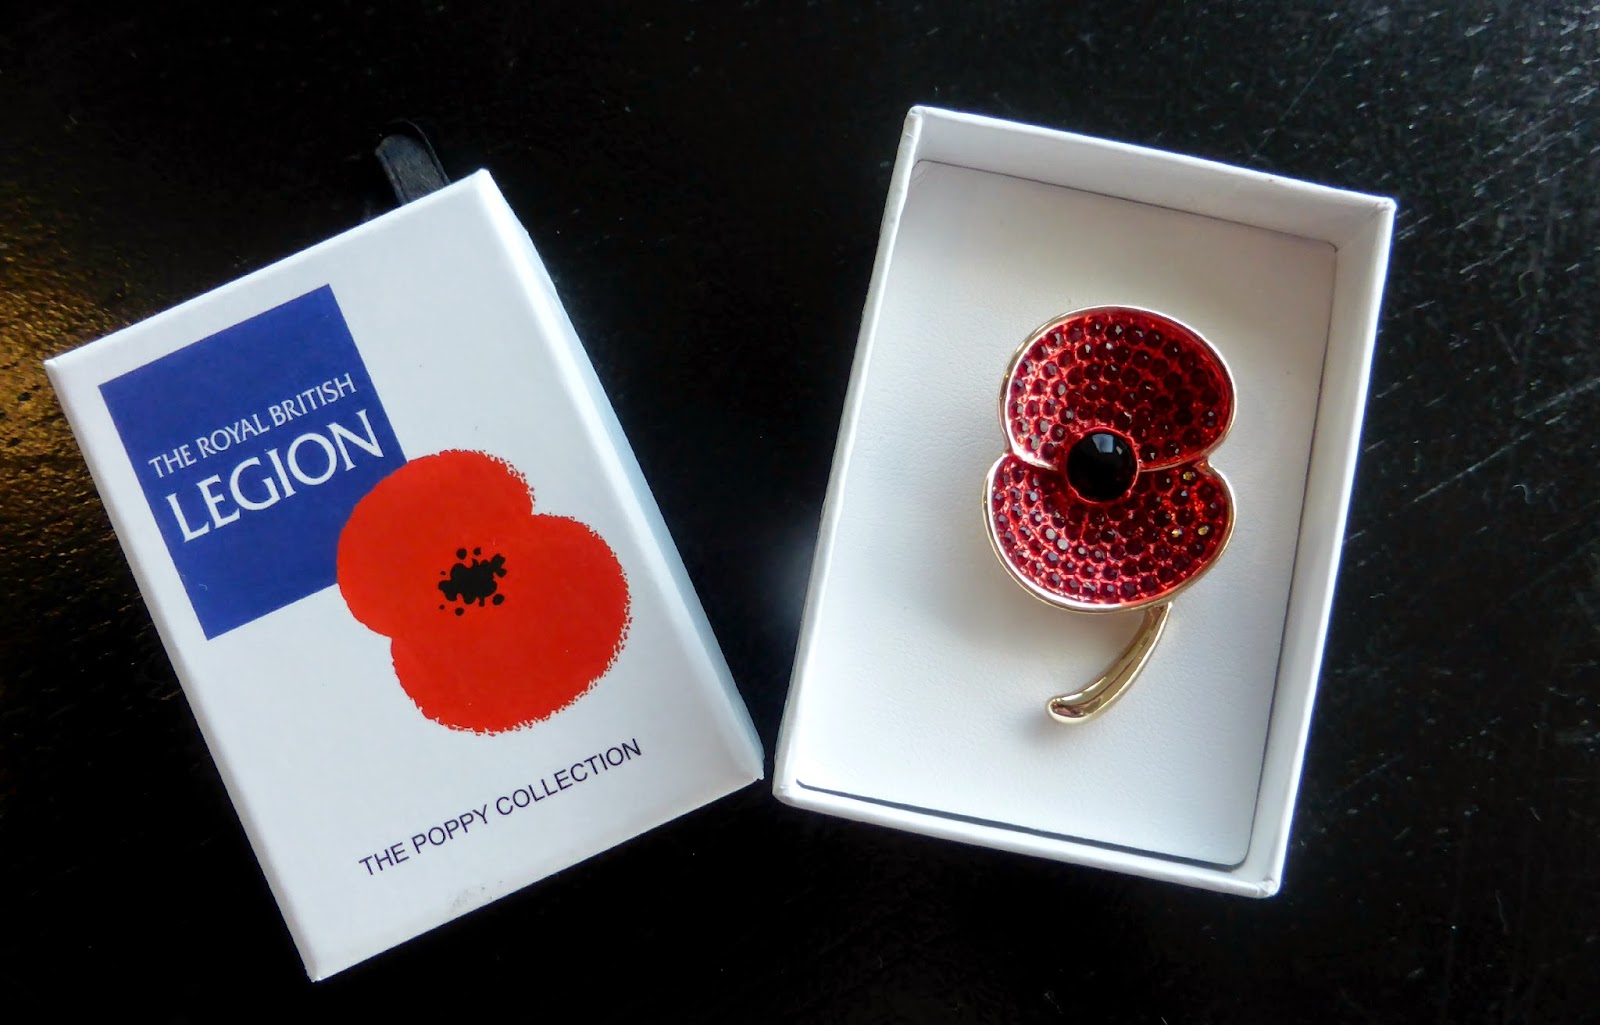 The British Legion Poppy Shop | New Girl in Toon